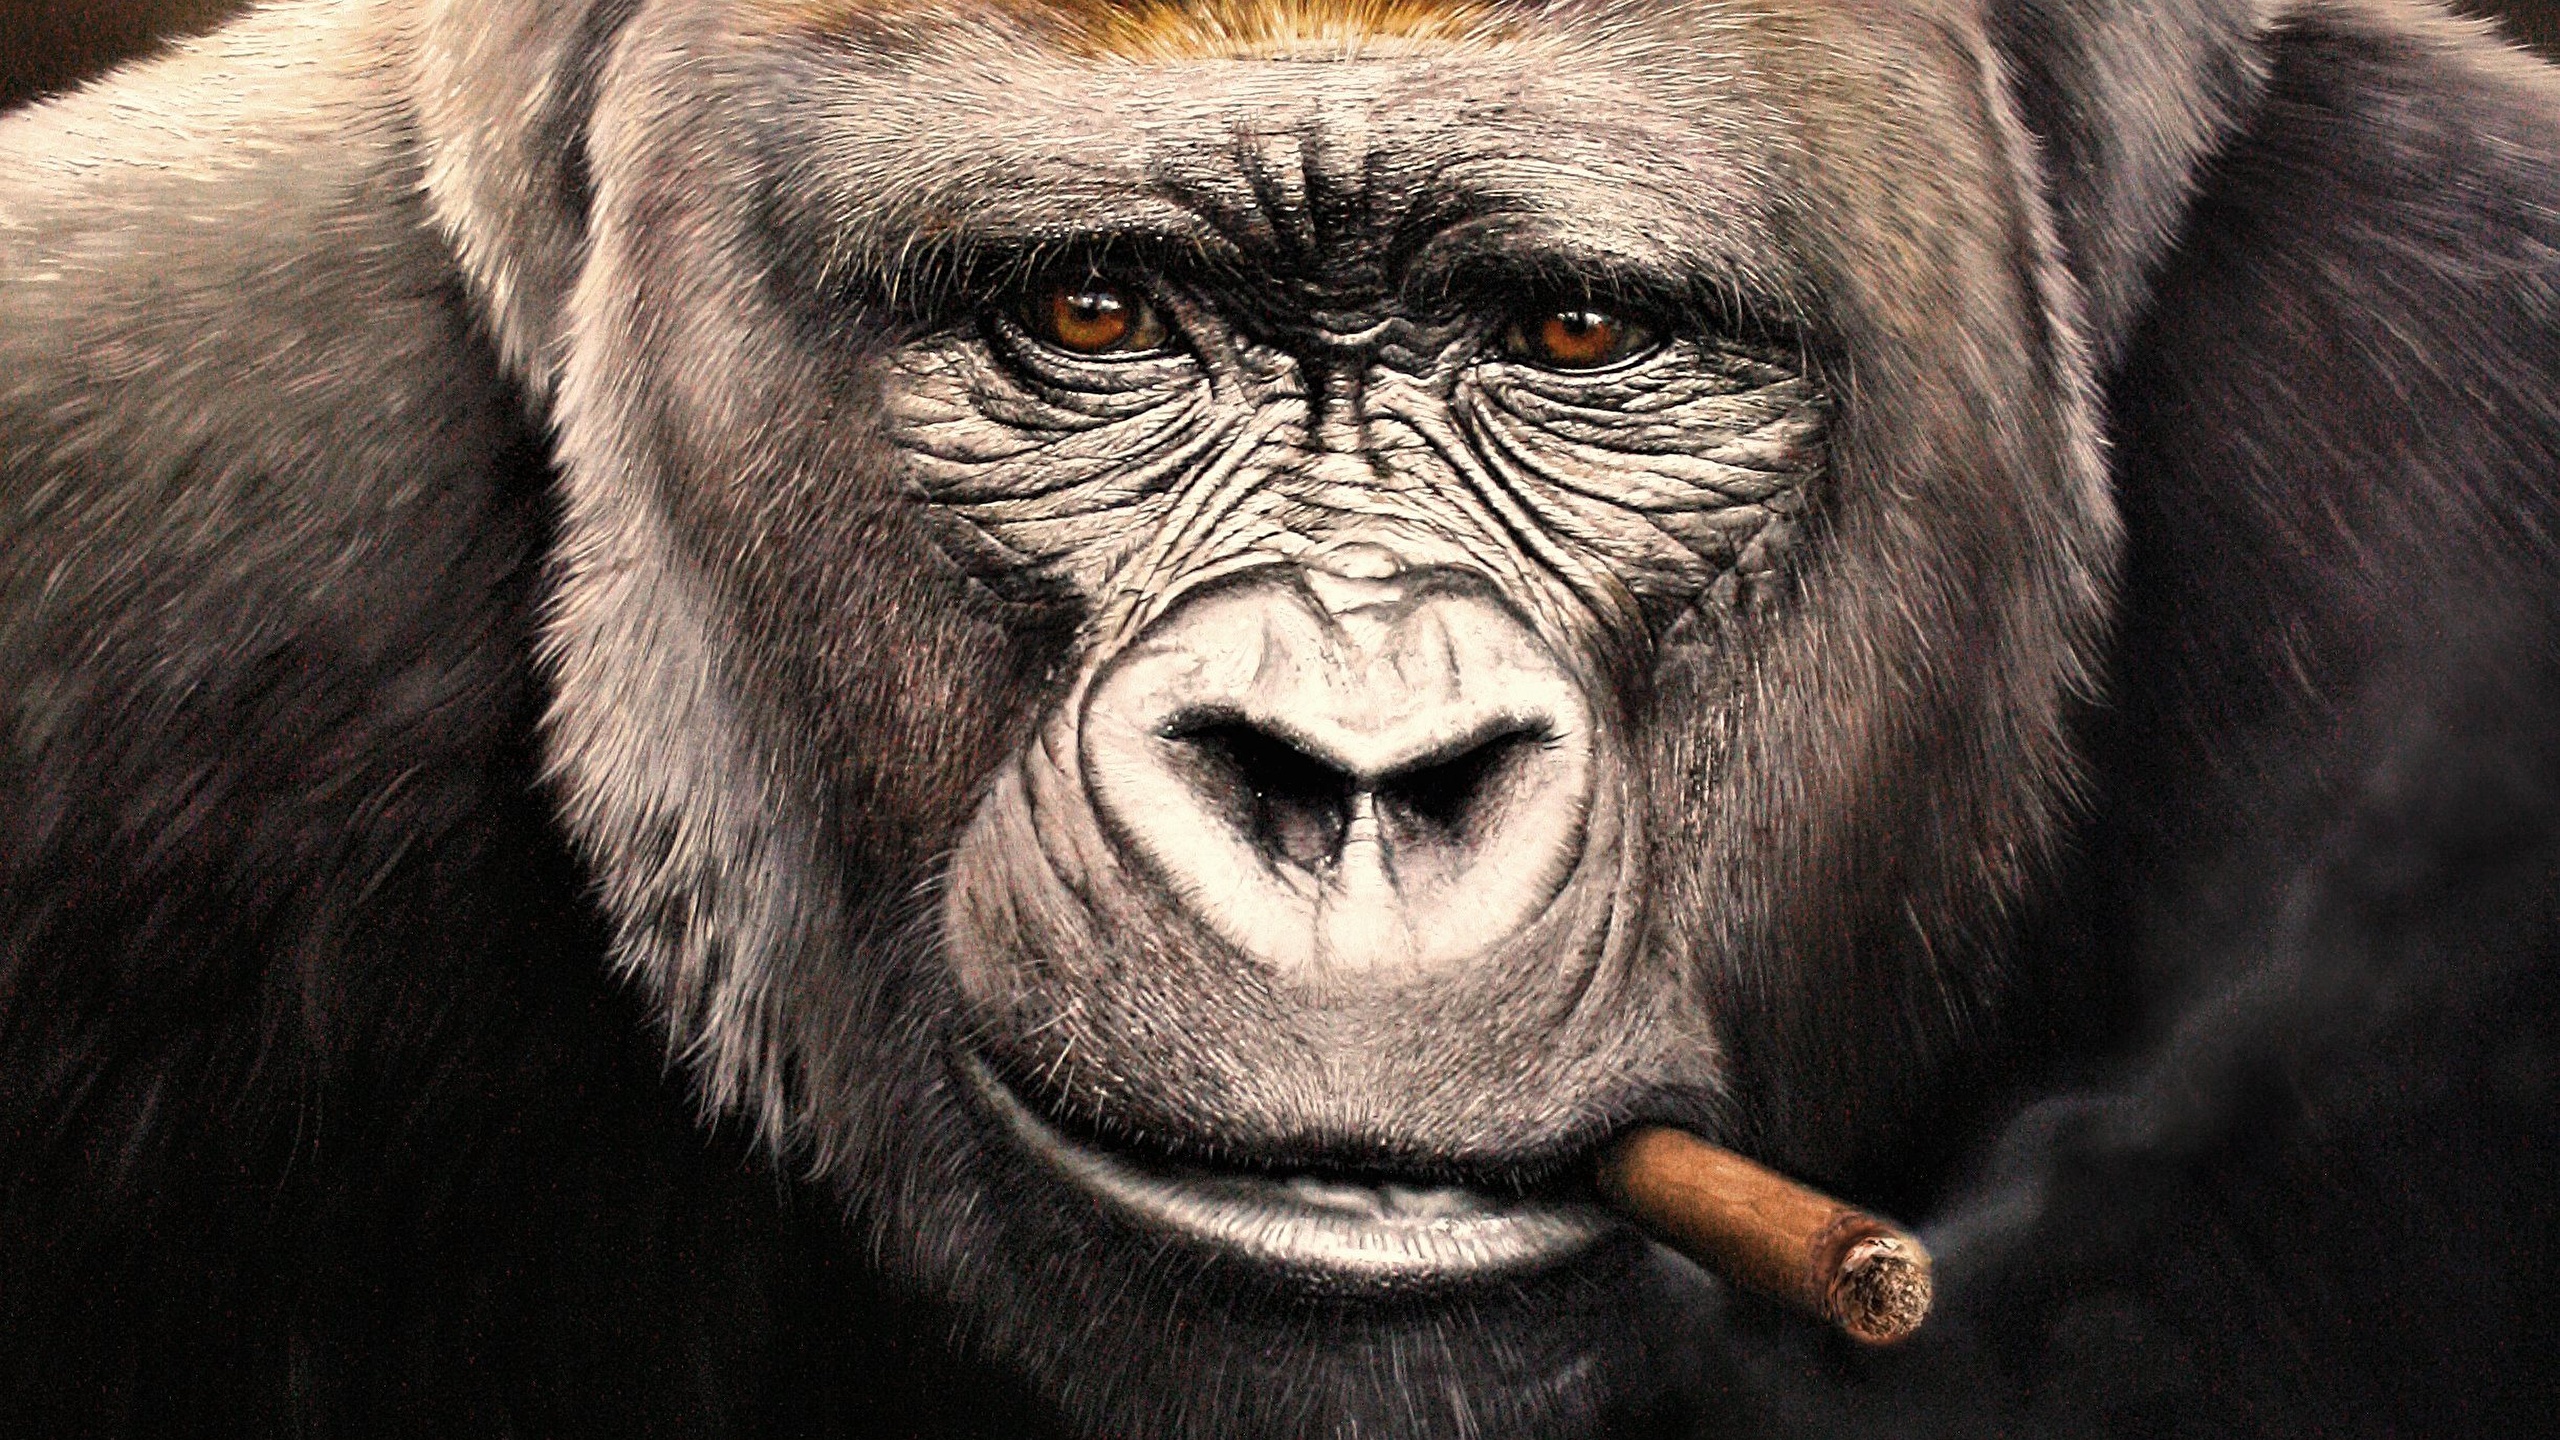 Wallpaper Monkey Cigar Gorilla Face Snout Staring Animals 2560x1440